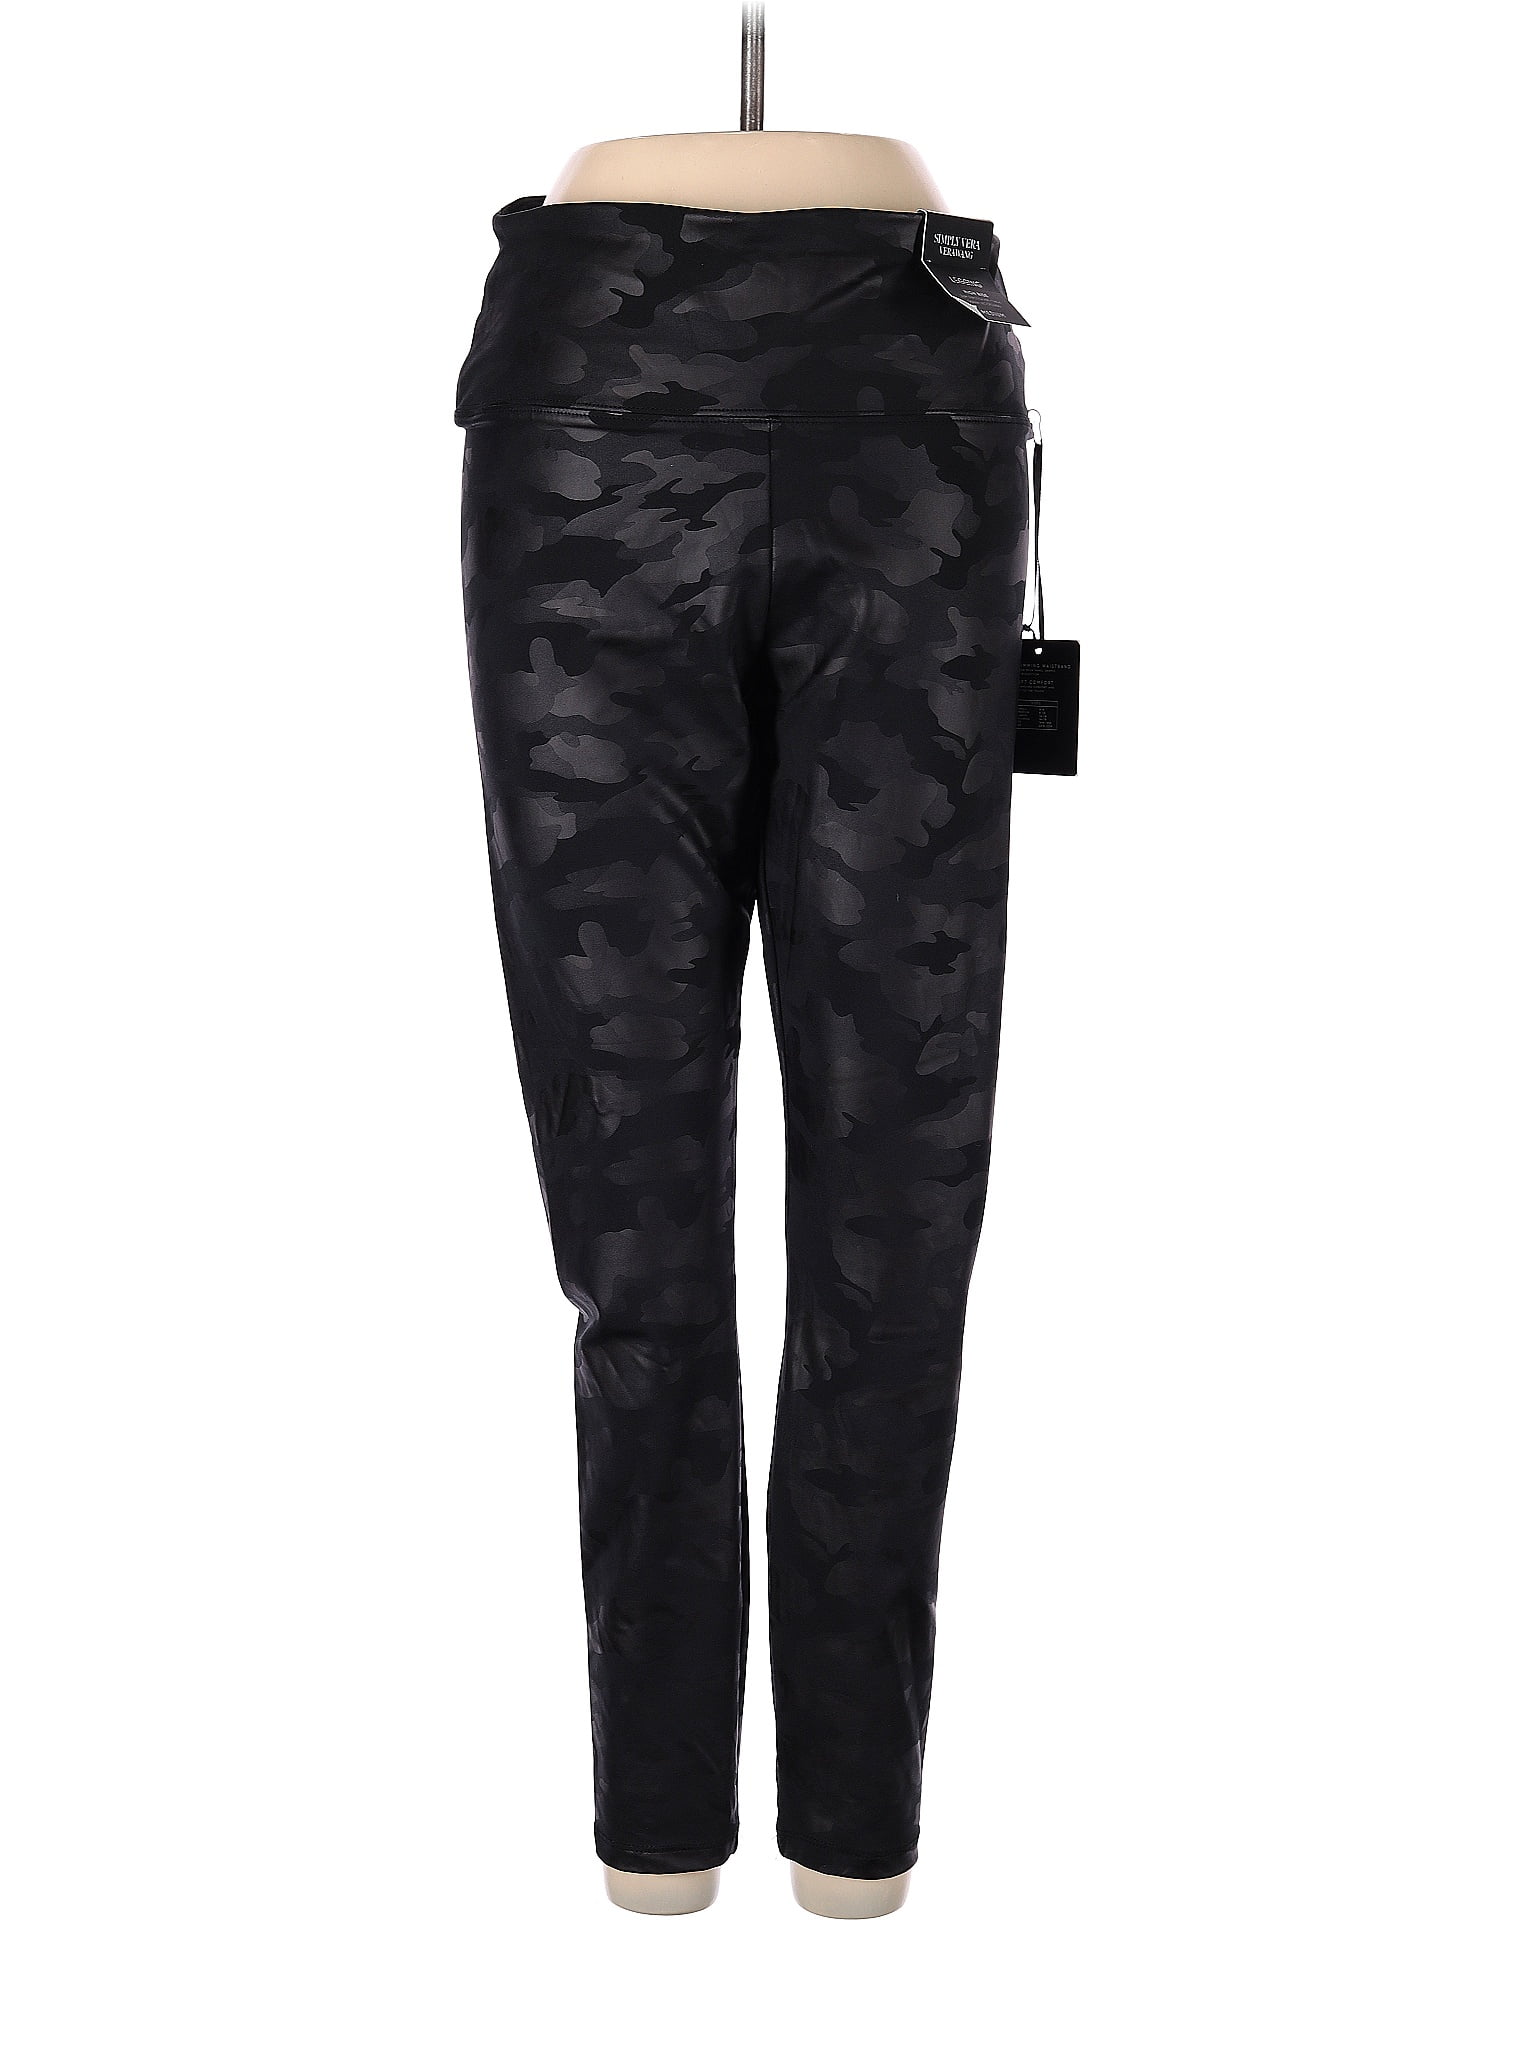 Simply Vera Vera Wang Camo Multi Color Black Active Pants Size M - 63% ...